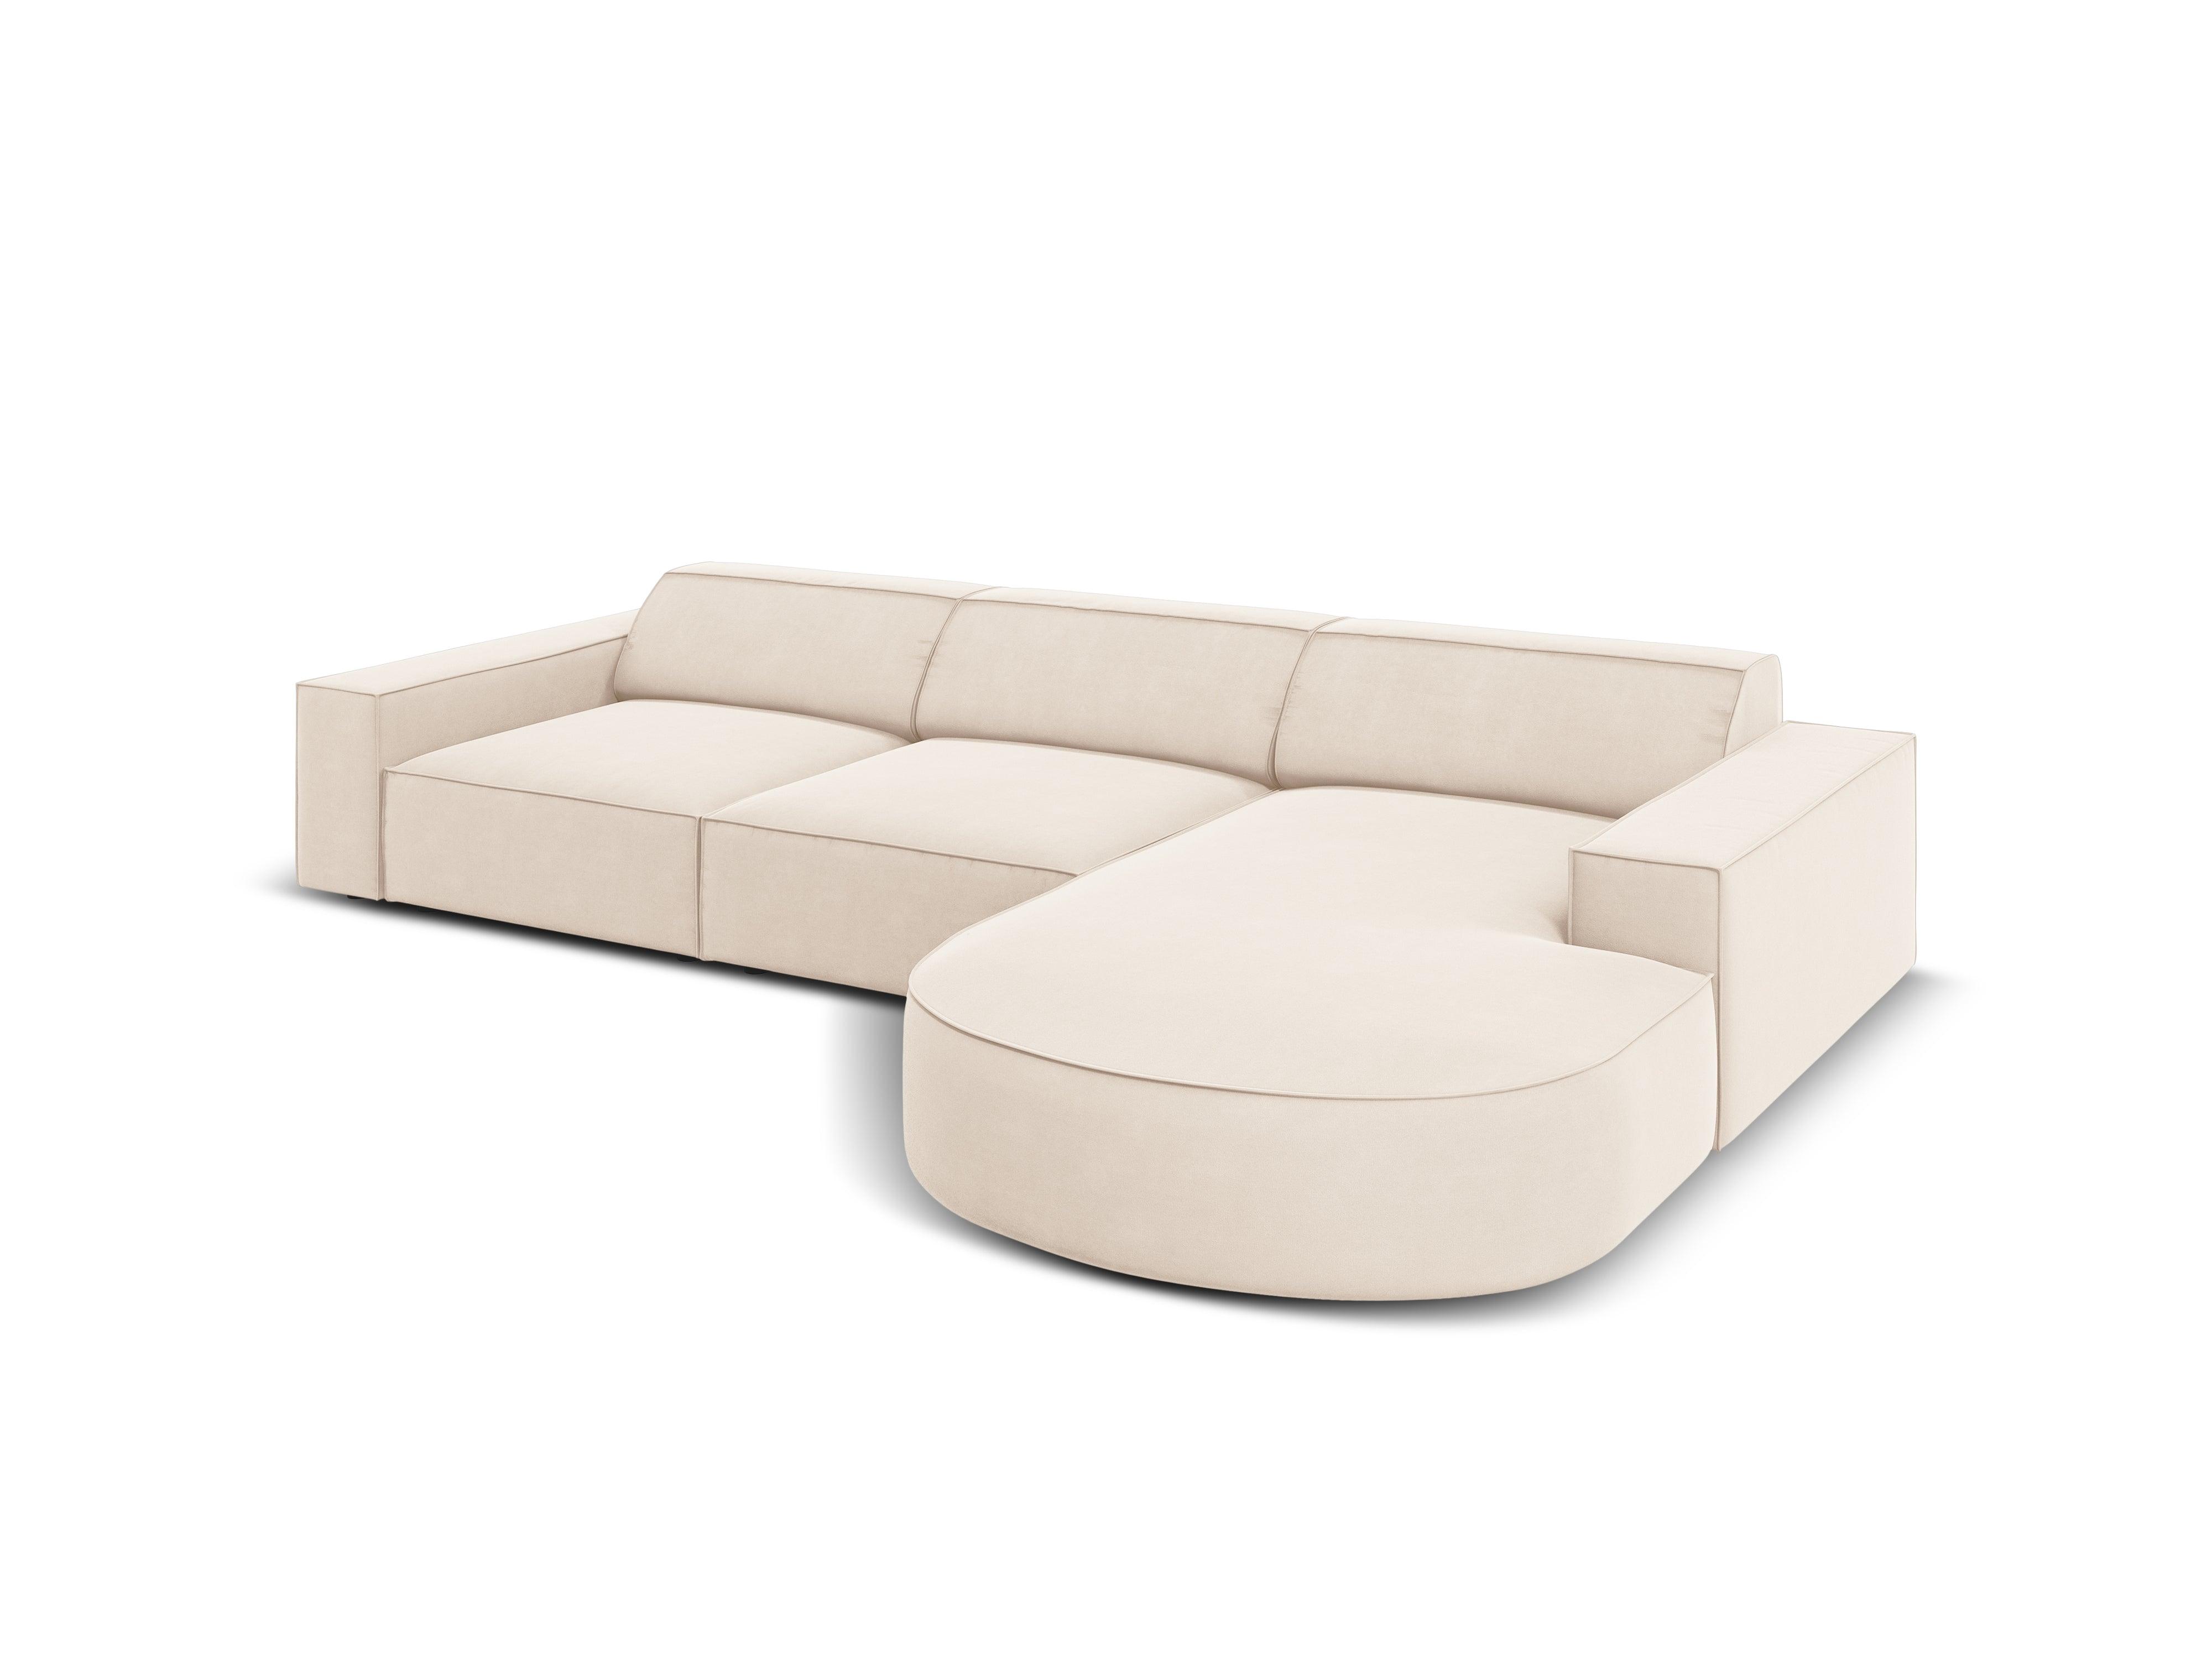 Velvet Right Corner Sofa, "Jodie", 4 Seats, 284x166x70
Made in Europe, Micadoni, Eye on Design